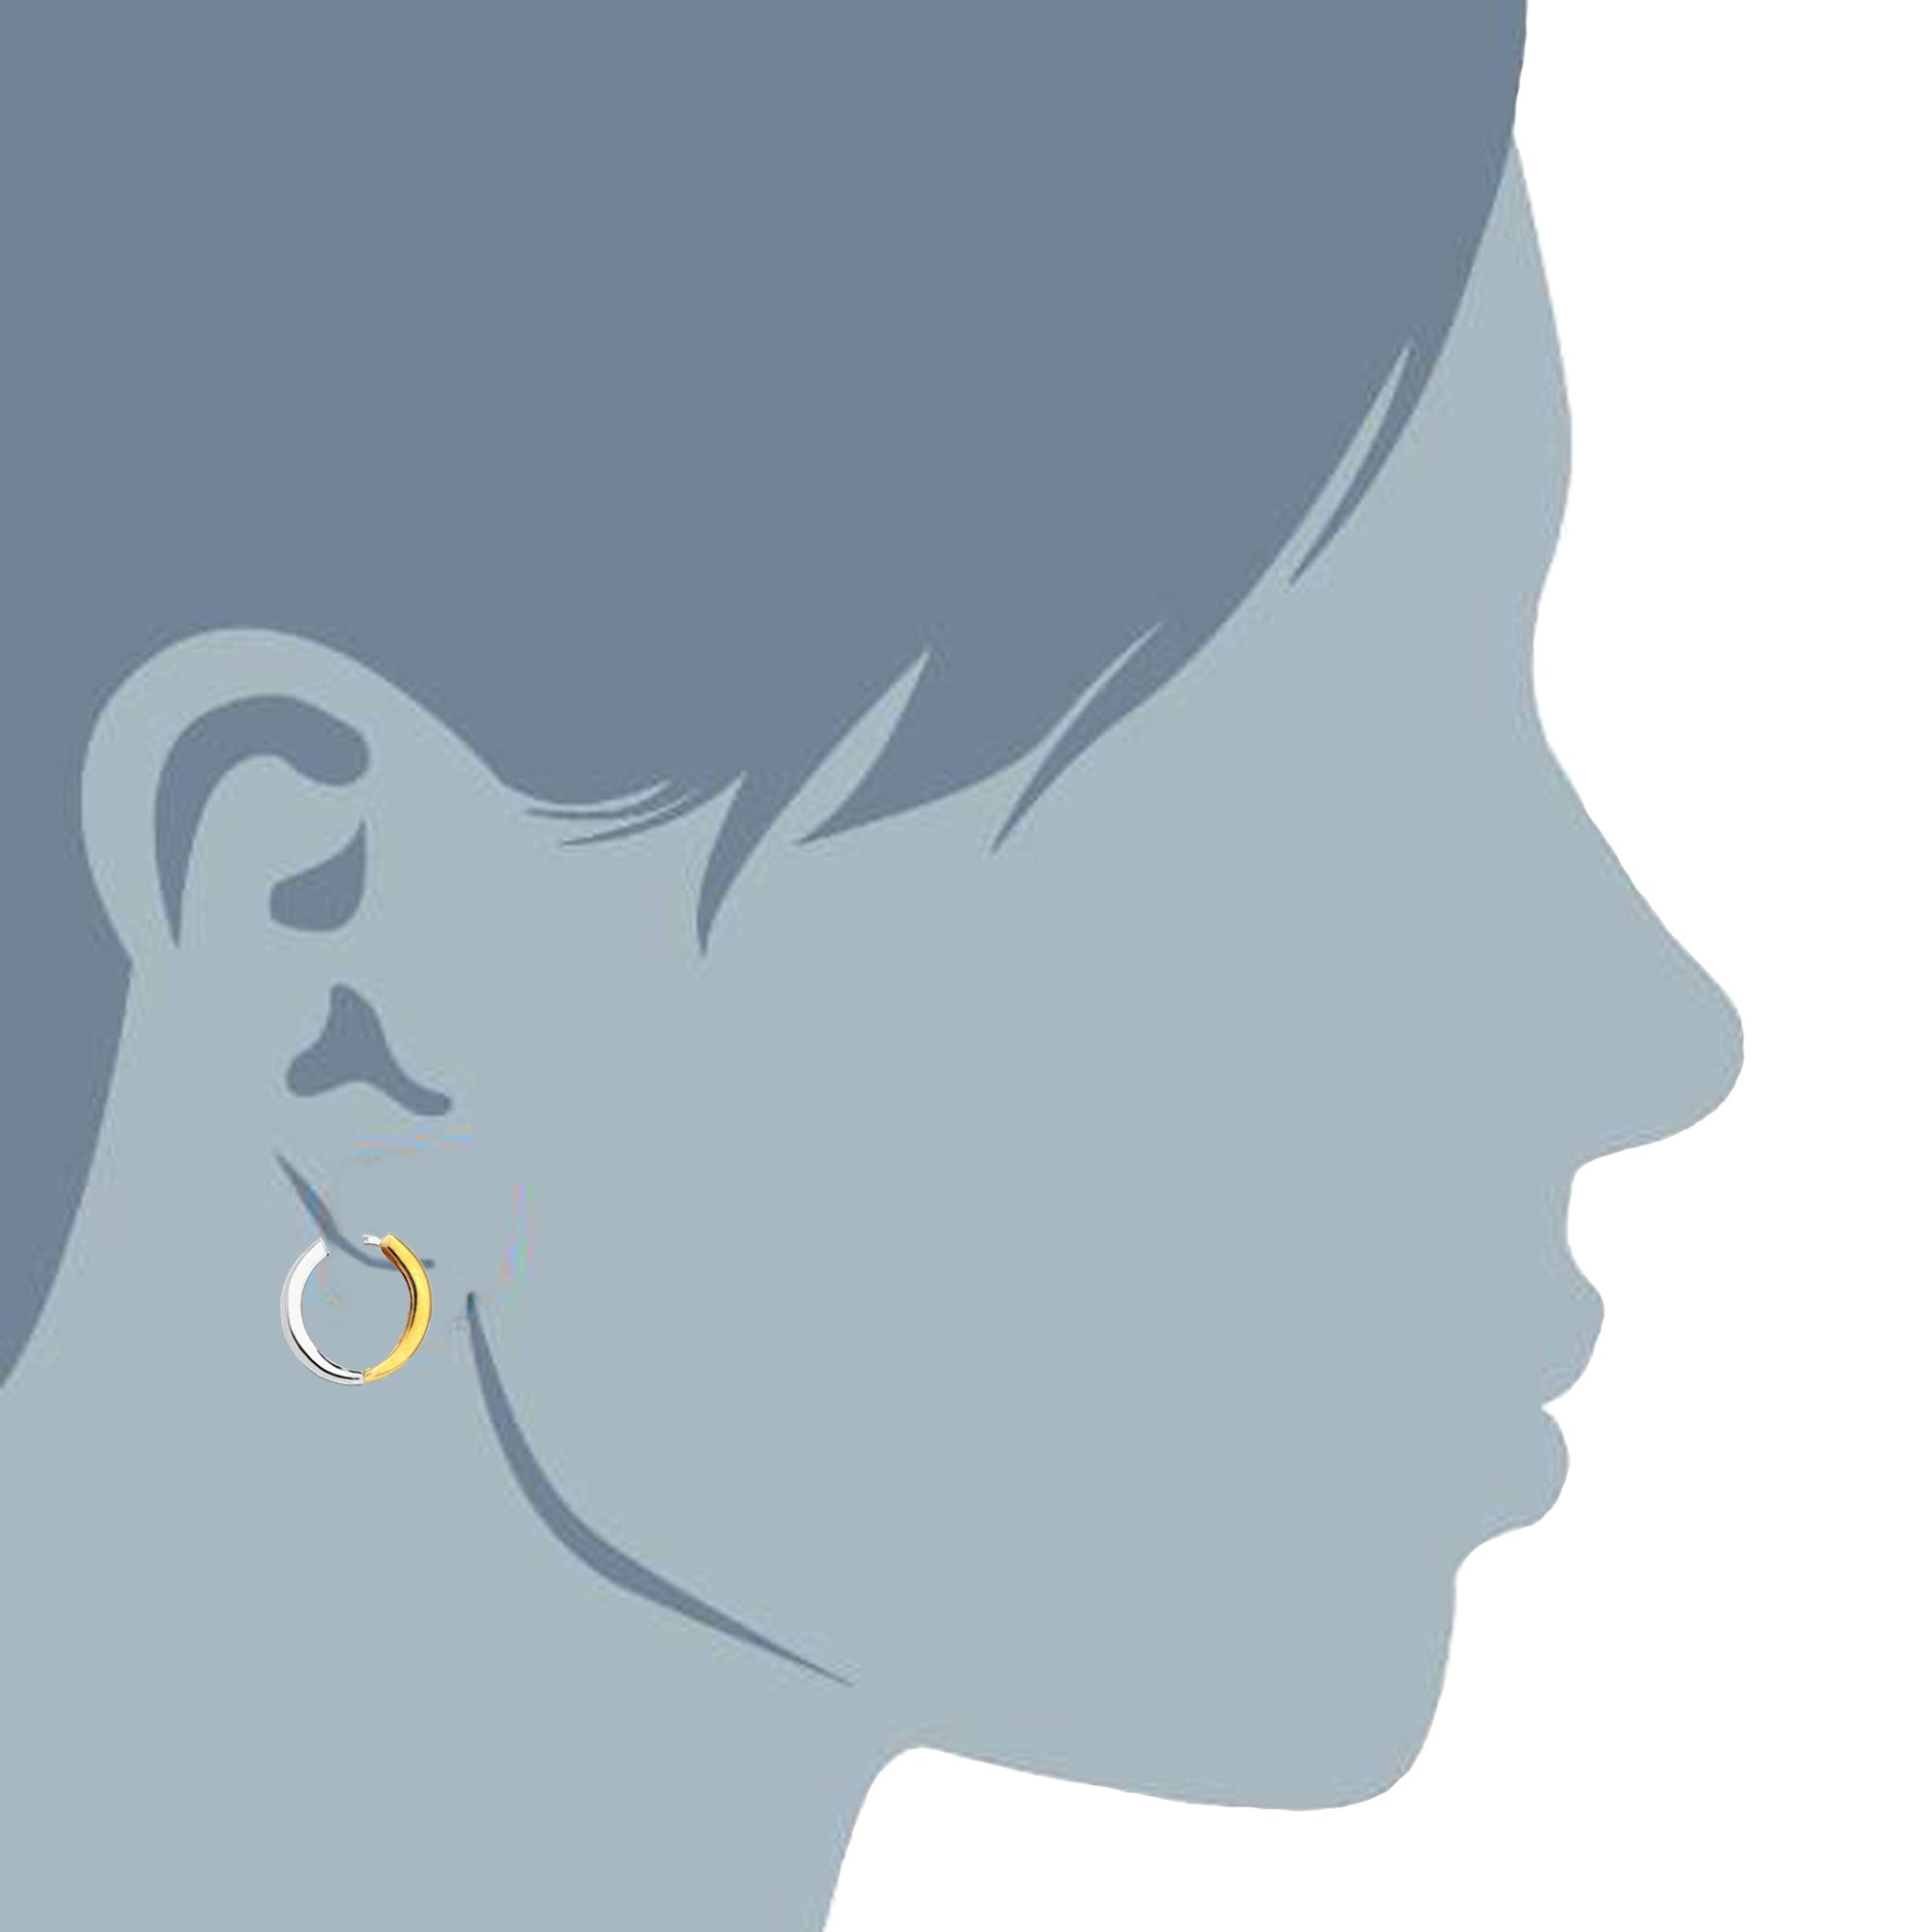 14k 2 Tone Gold Snuggable Huggie Reversible Earrings, Diameter 15mm fine designer jewelry for men and women